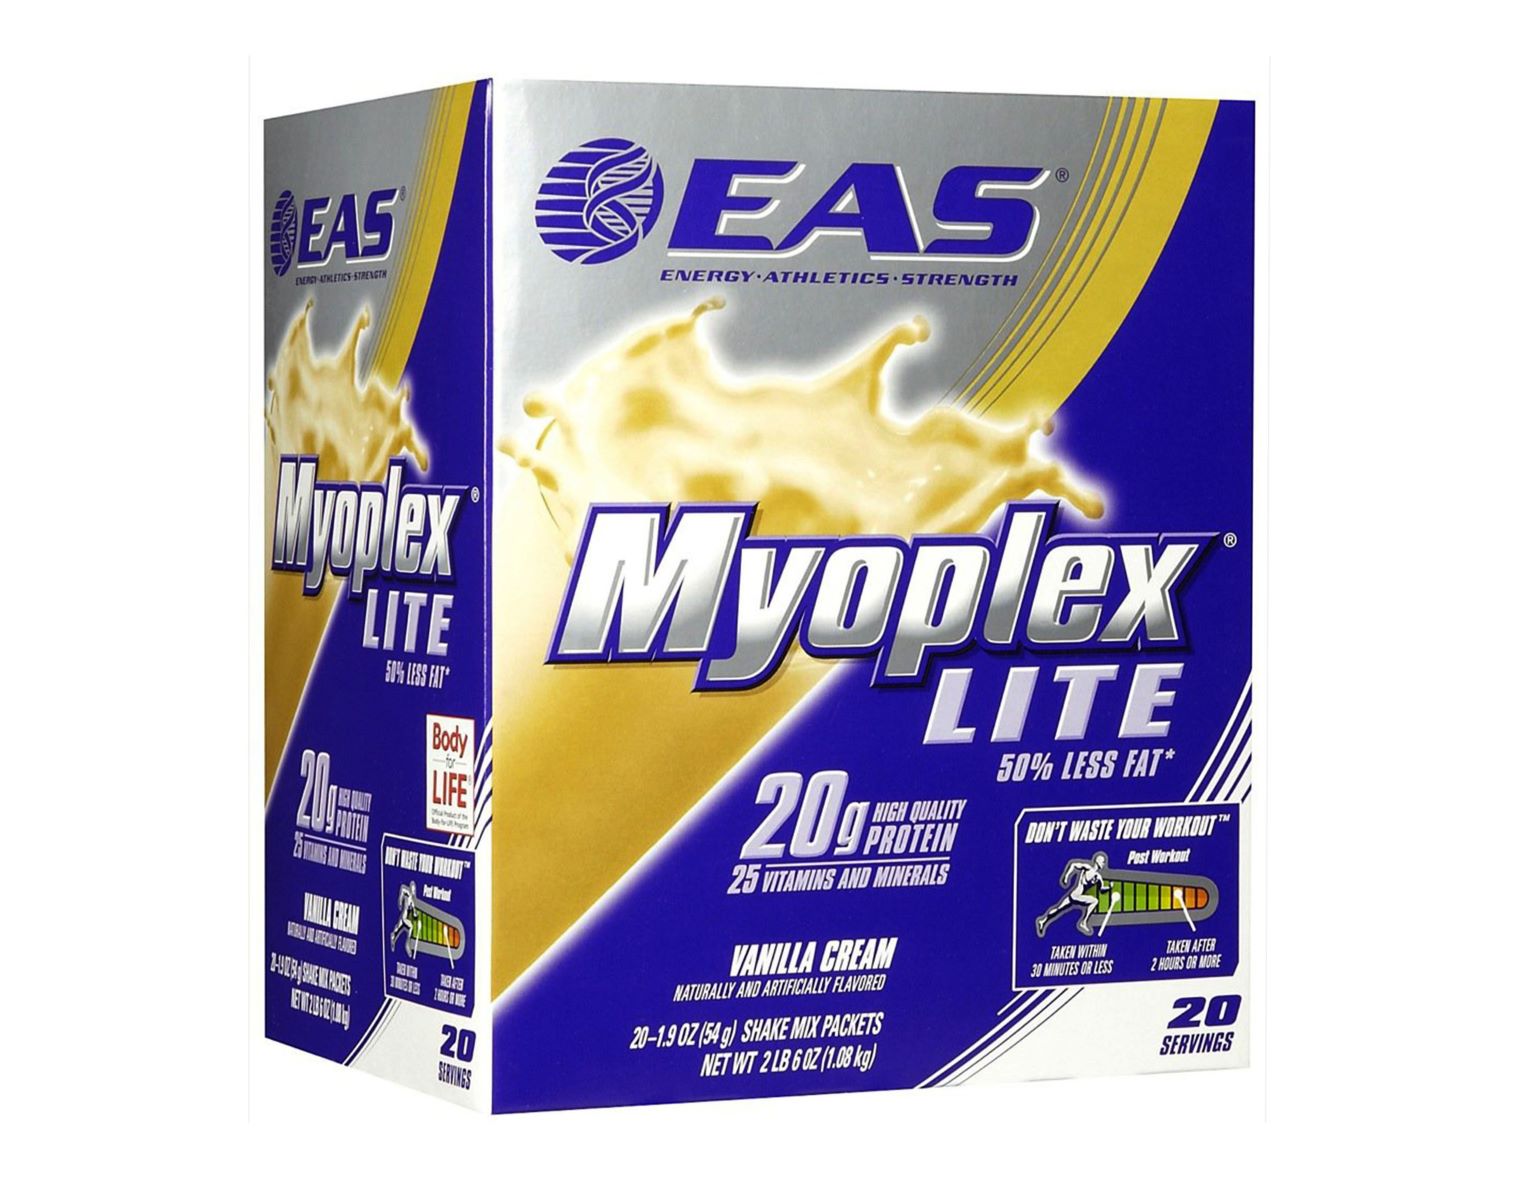 15-myoplex-lite-nutrition-facts